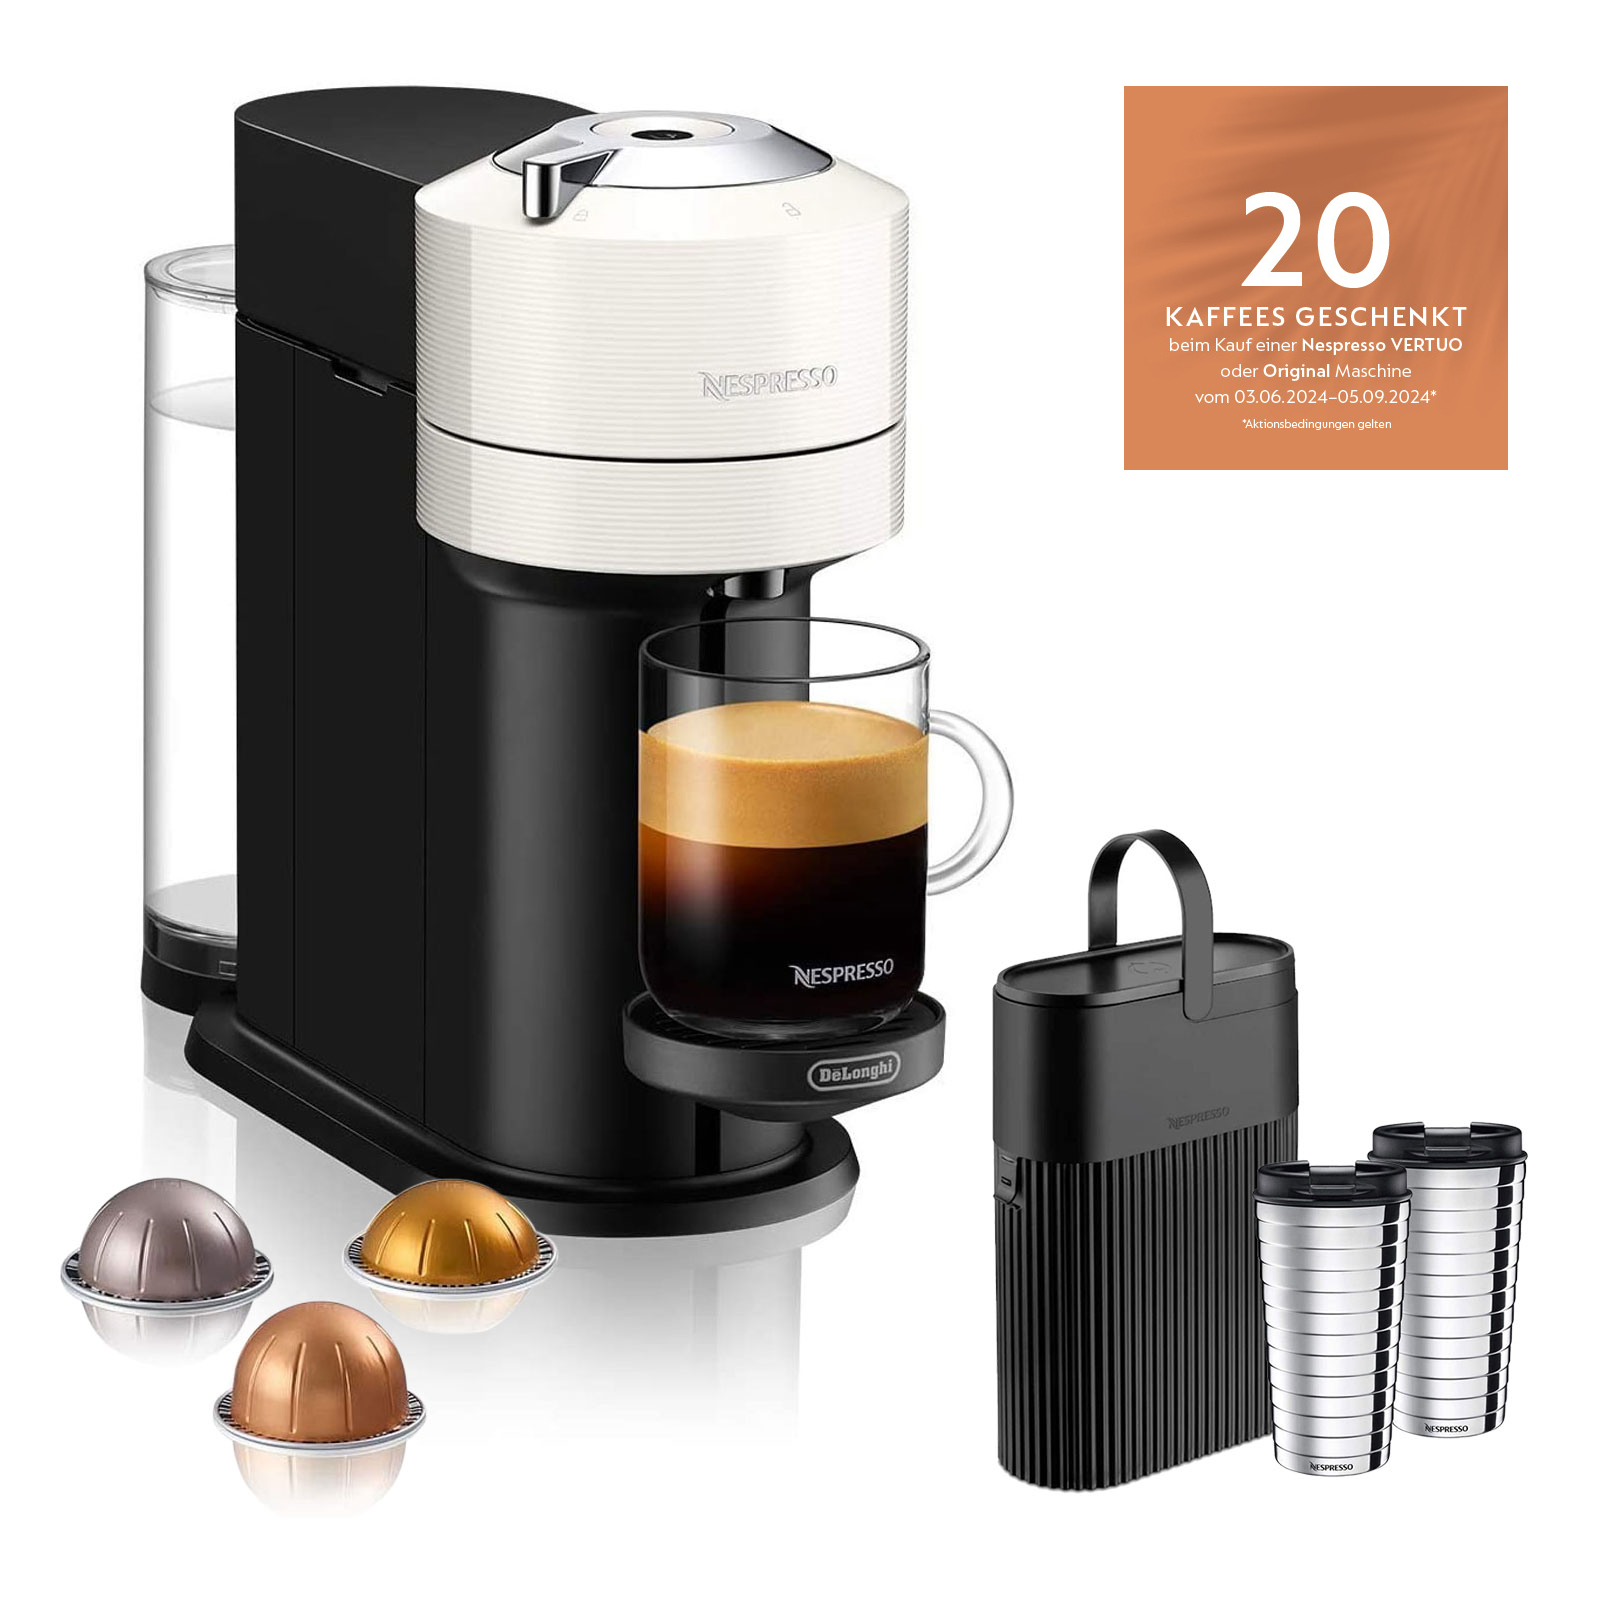 Delonghi ENV120.W VertuoNext Basic + Nespresso Geschenk-Set Recycling Behälter + Travel Mug